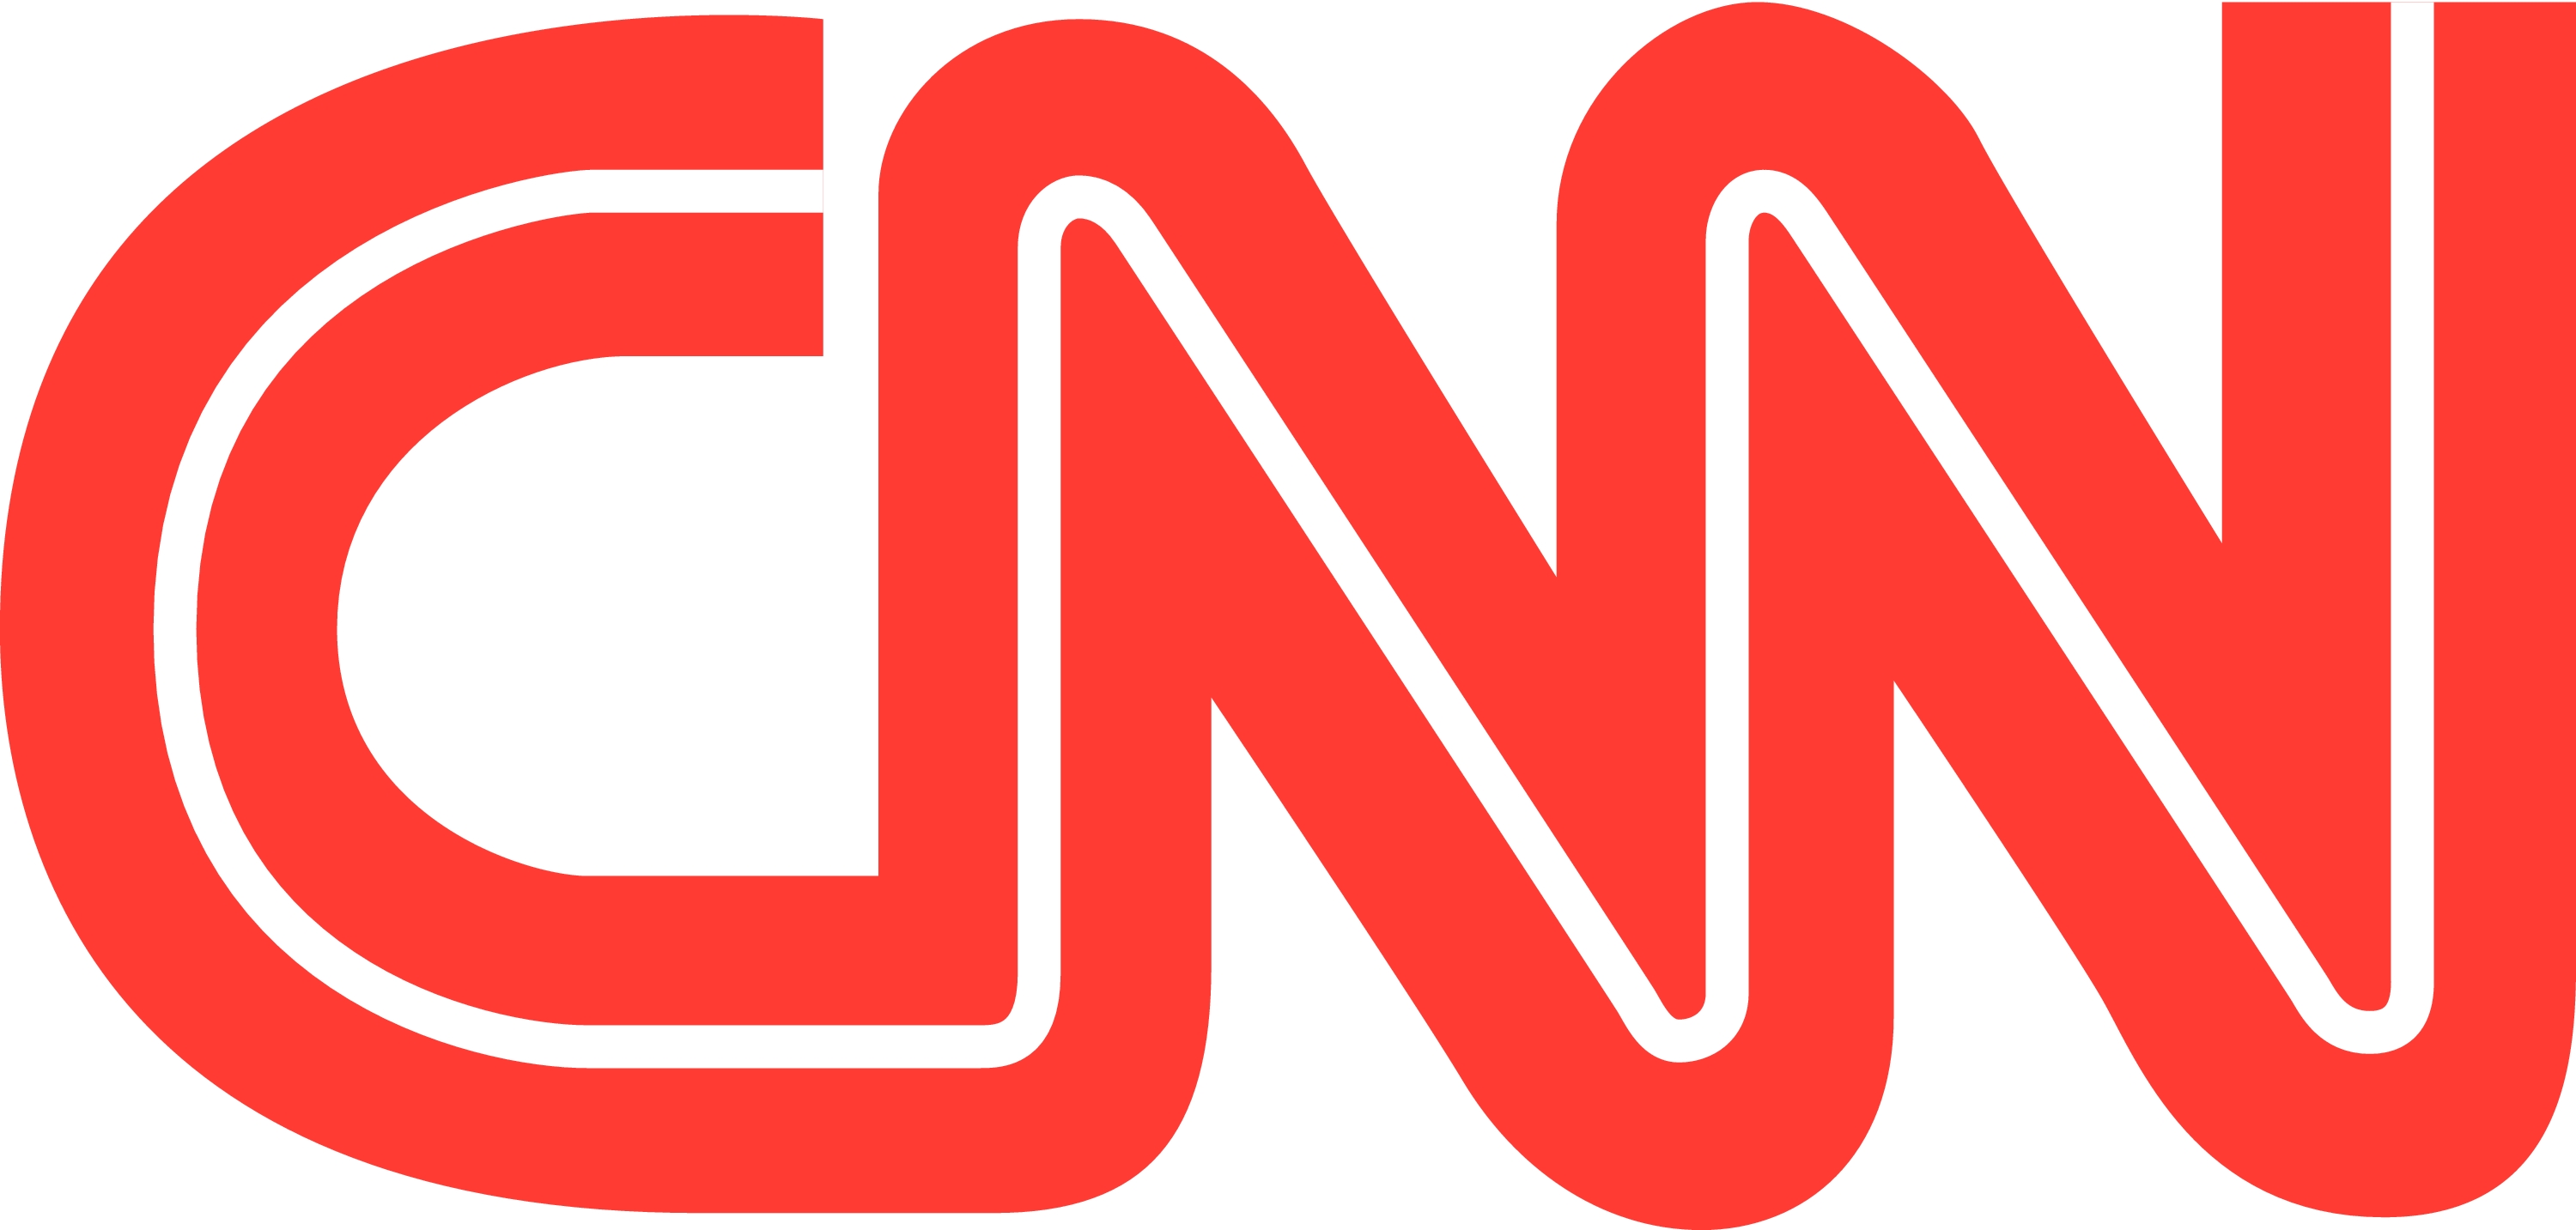 CNN_logo.jpg